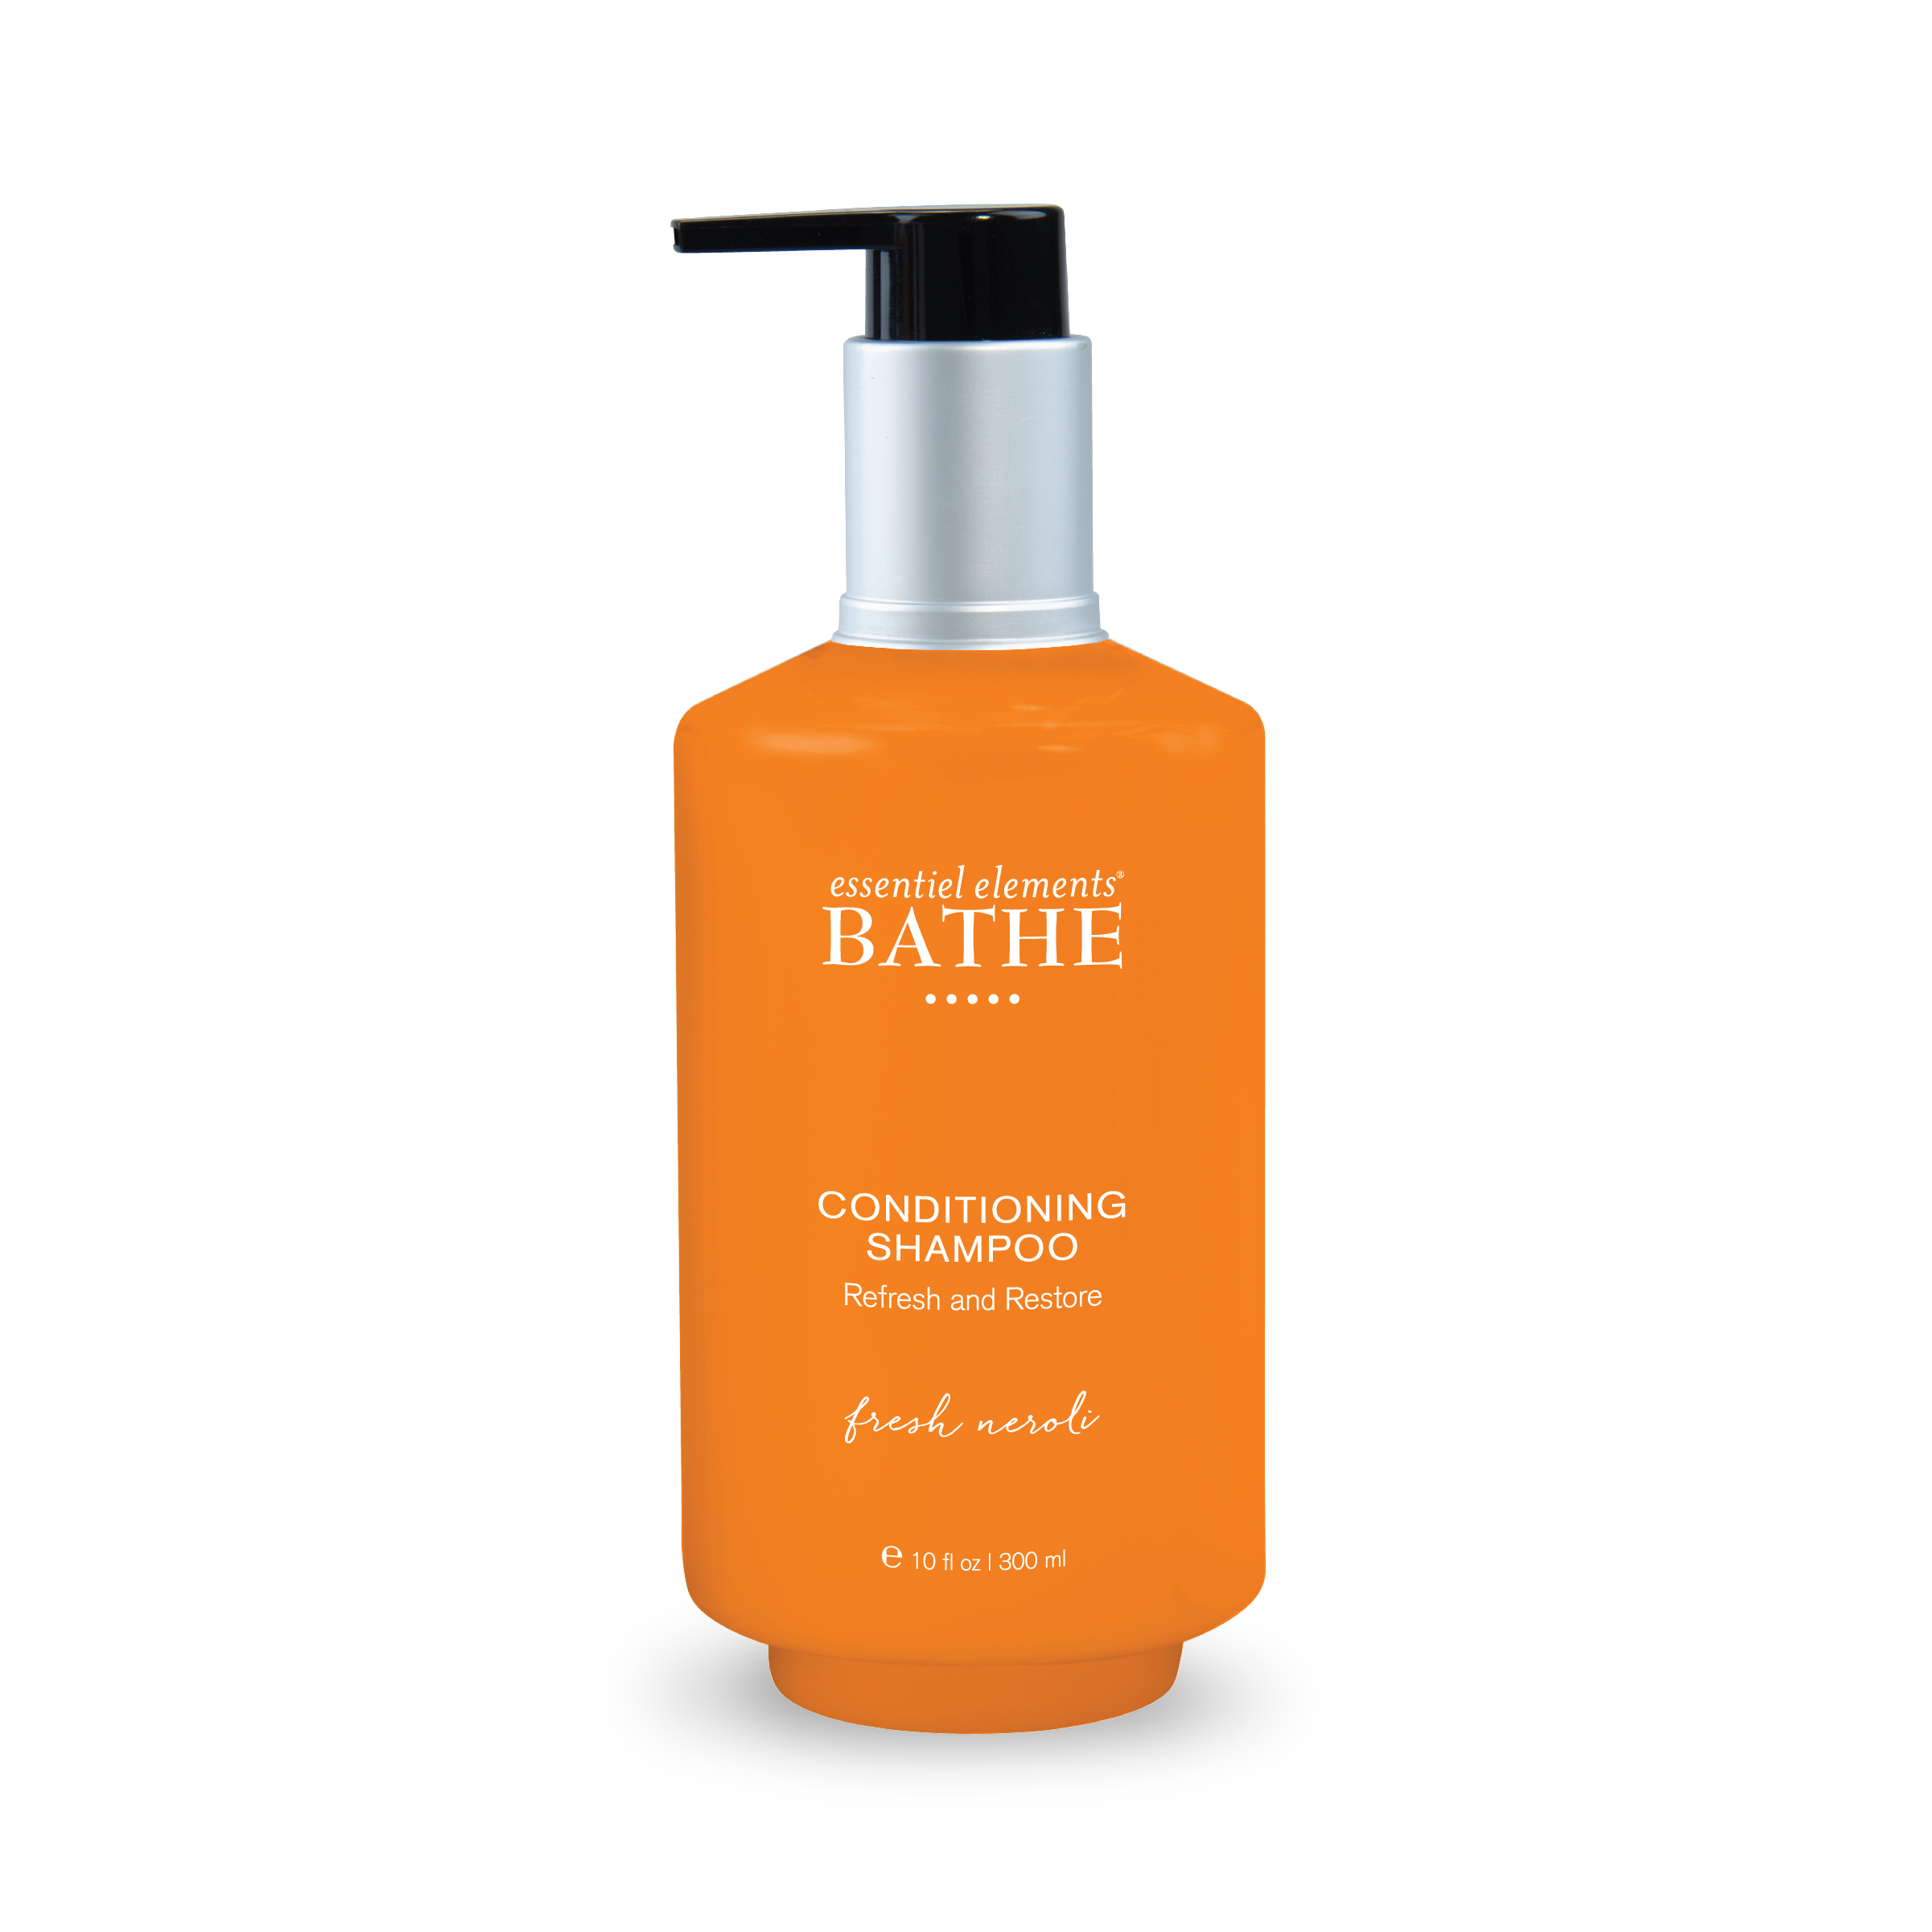 10oz/300ml Essential Elements Bathe Shampoo-Conditioner Premium Pump Bottles